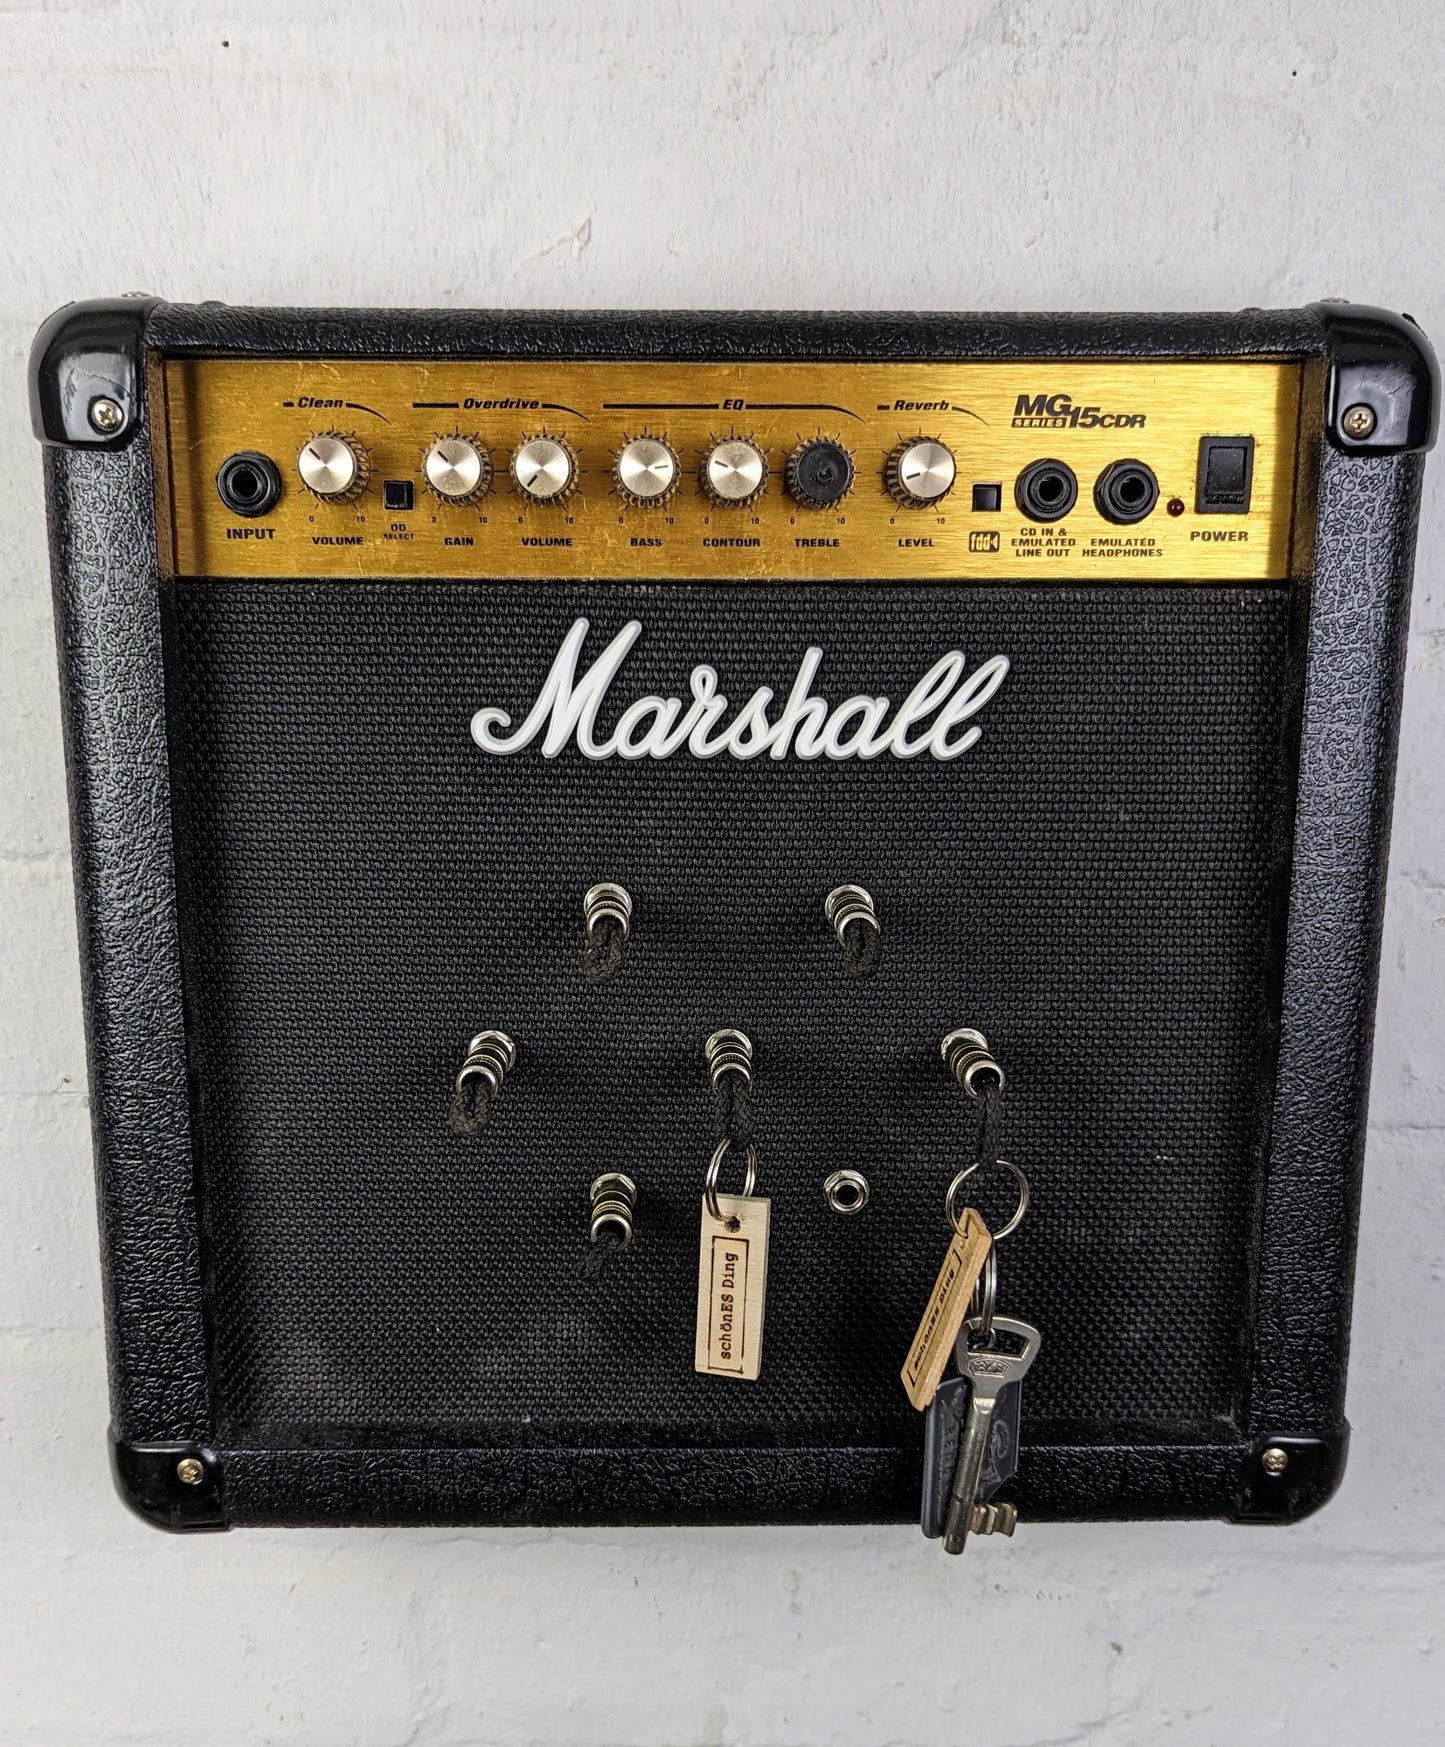 Marschall-Board - XL